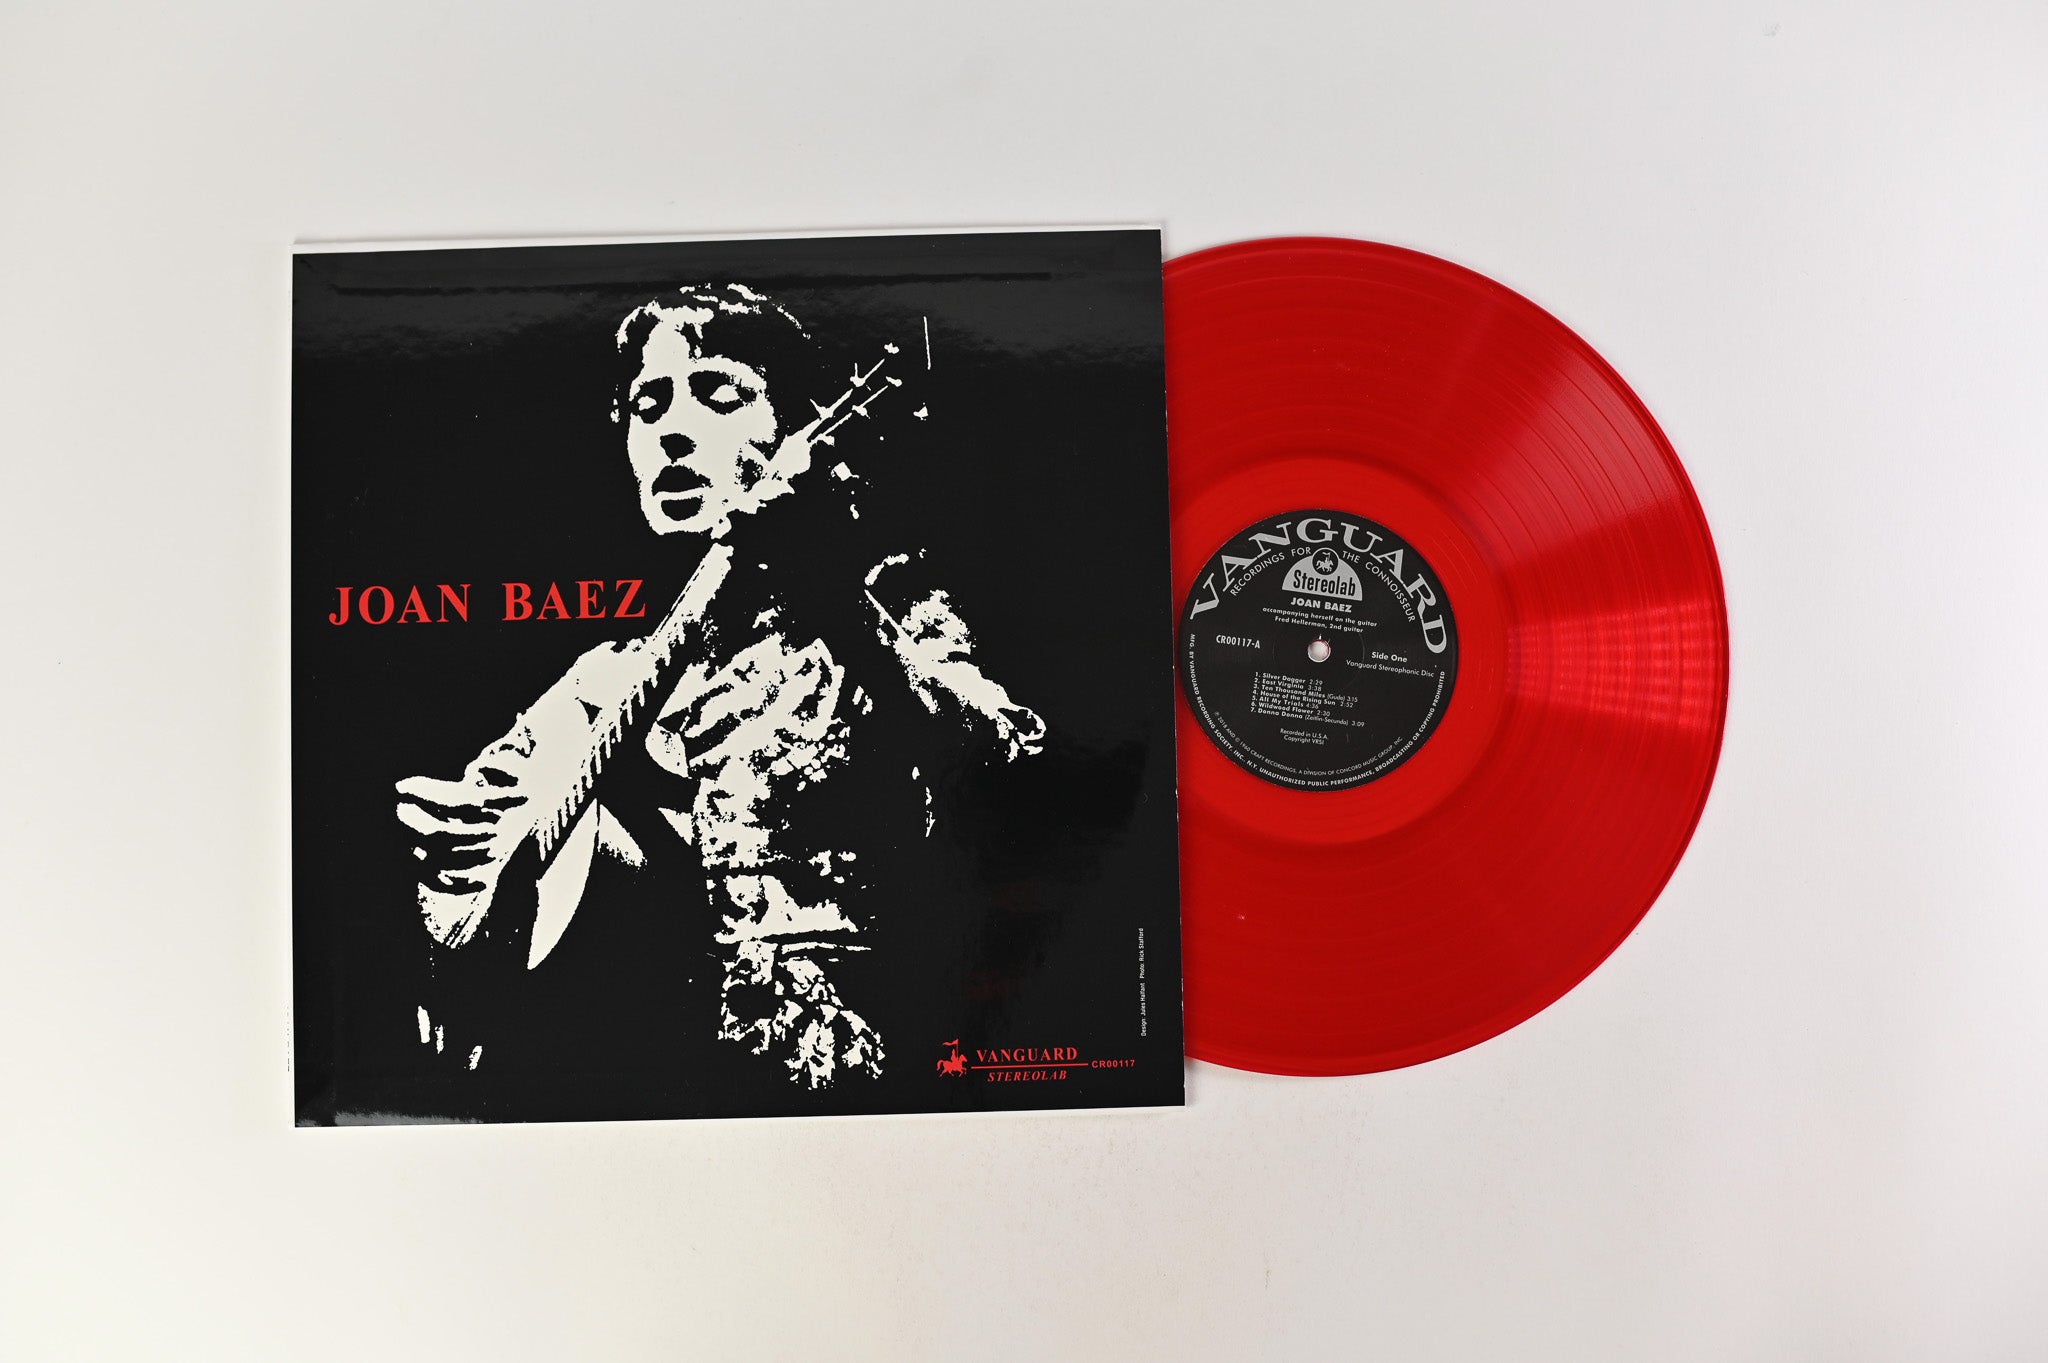 Joan Baez - Joan Baez on Craft Recordings - Red Vinyl